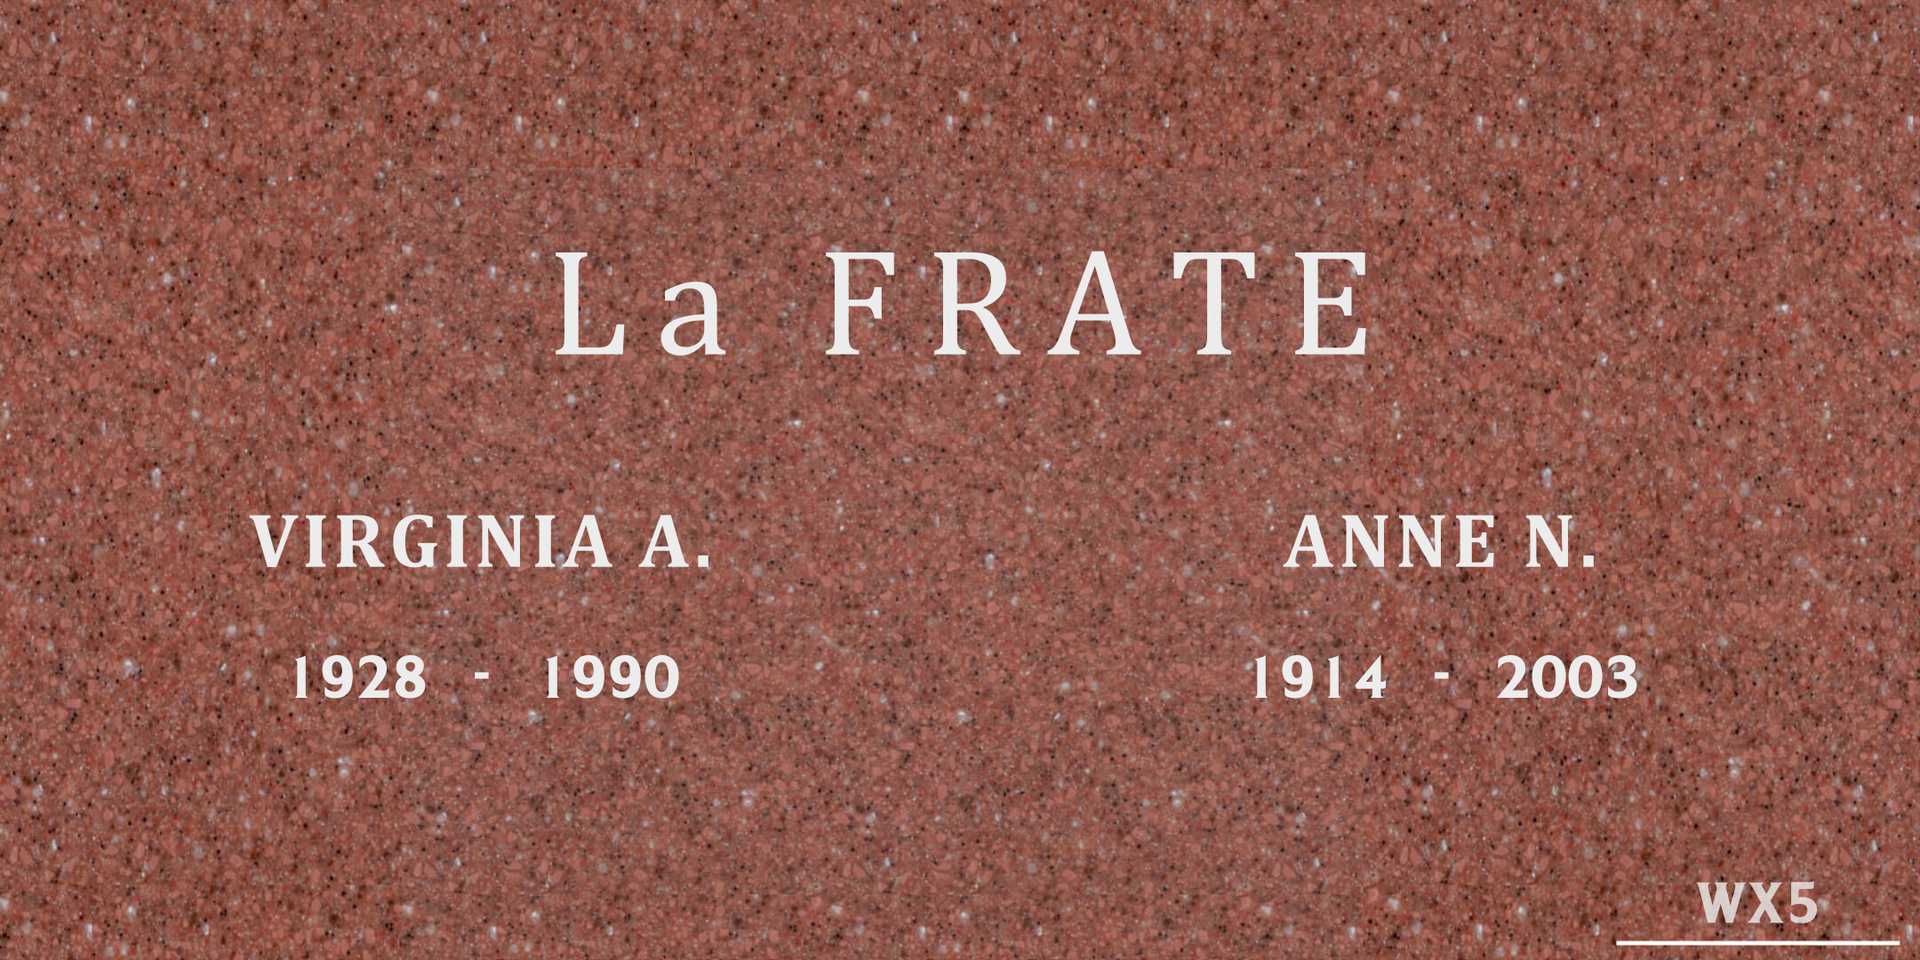 Anne N. La Frate's grave